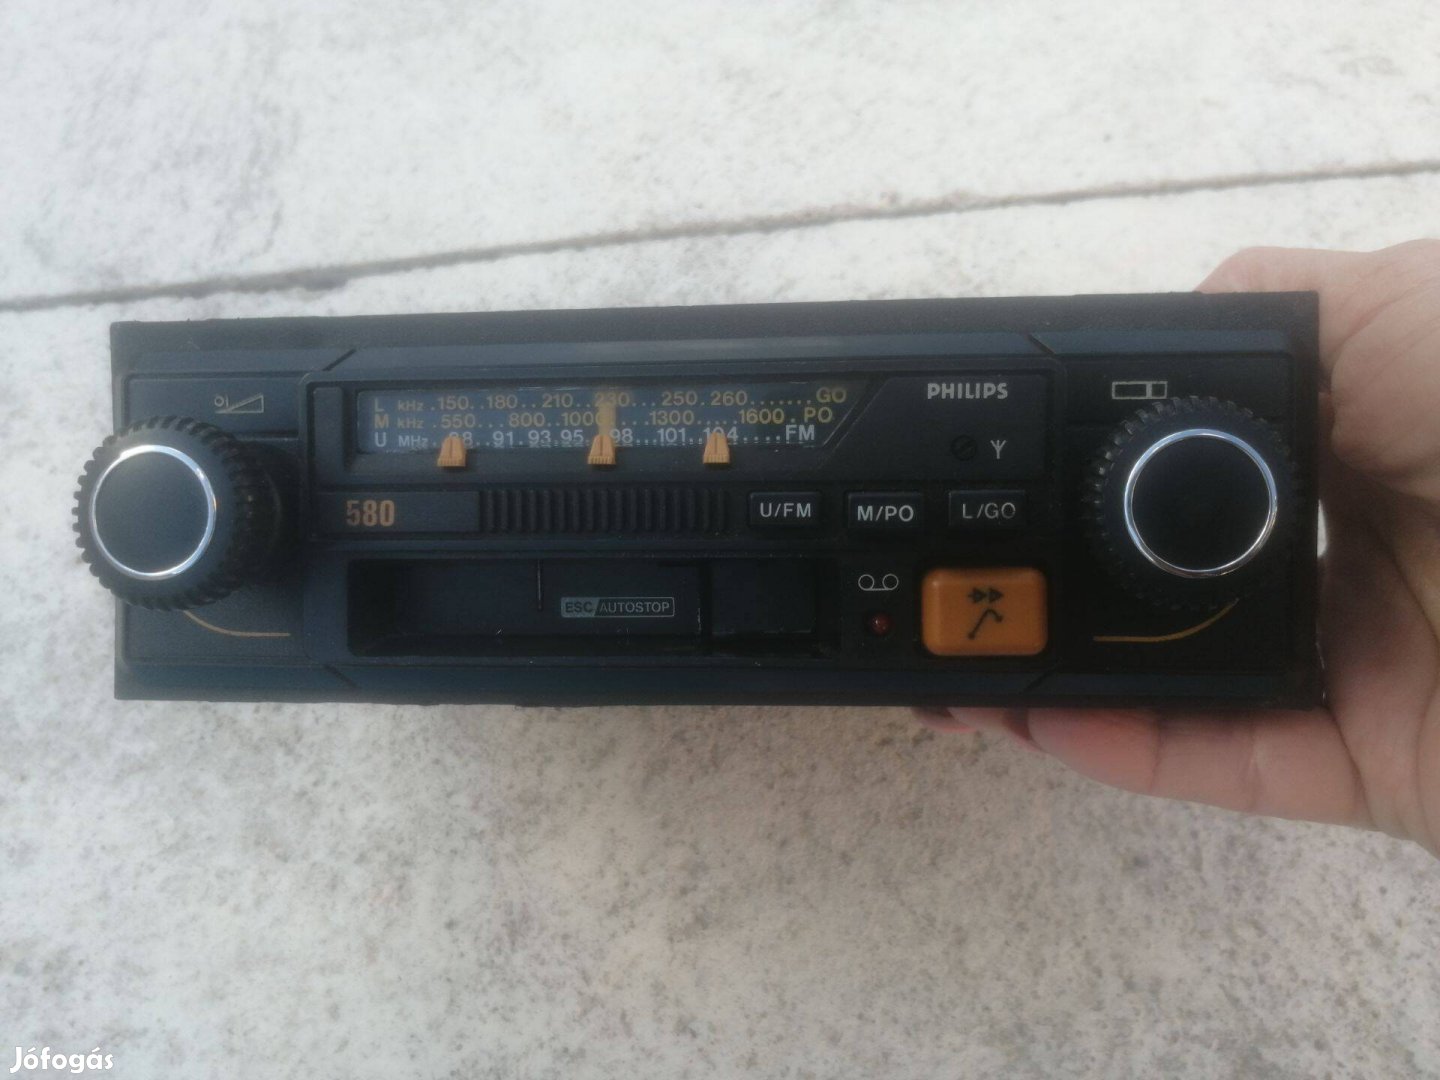 Philips AC 580 típusú retro kazettás rádiós magnó